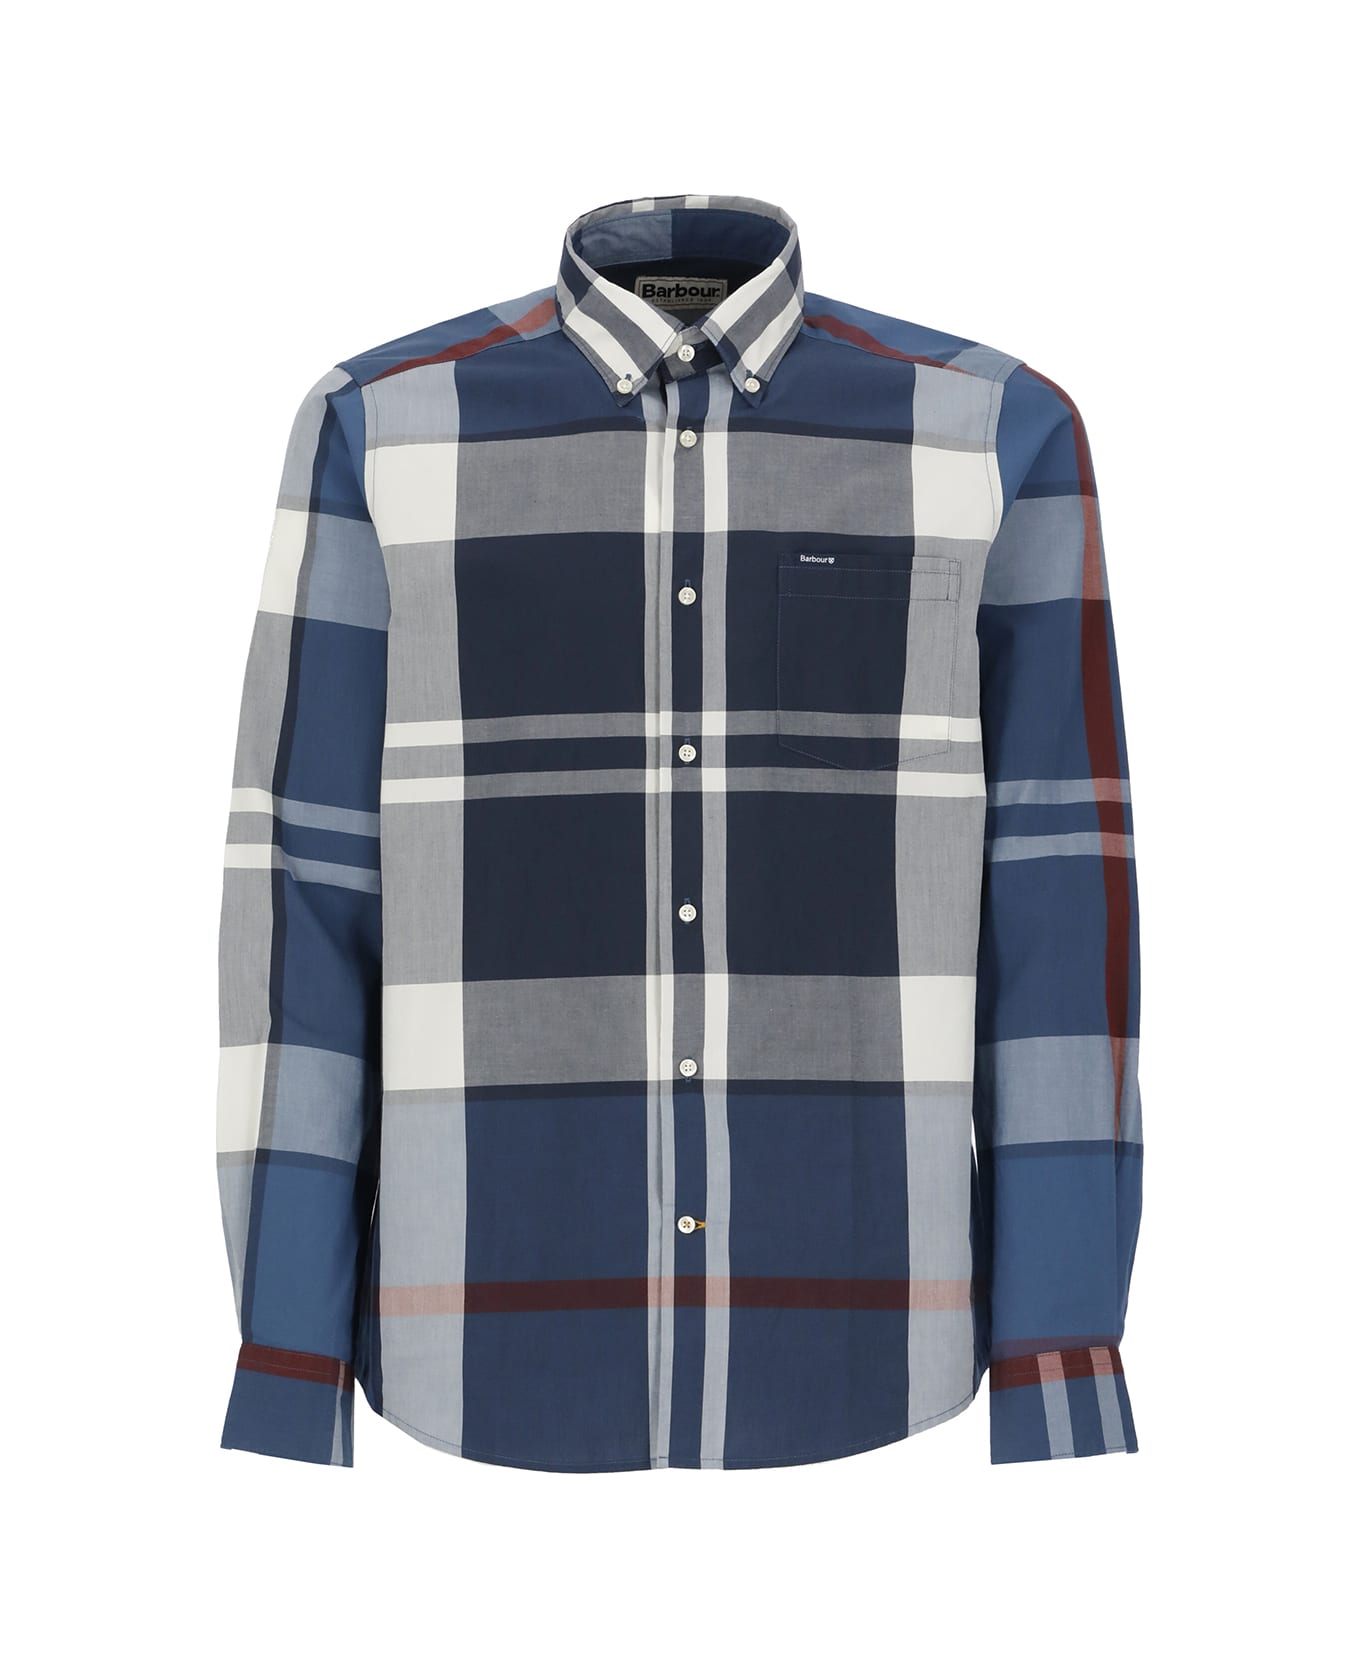 Barbour Shirt With Tartan Pattern - NAVY